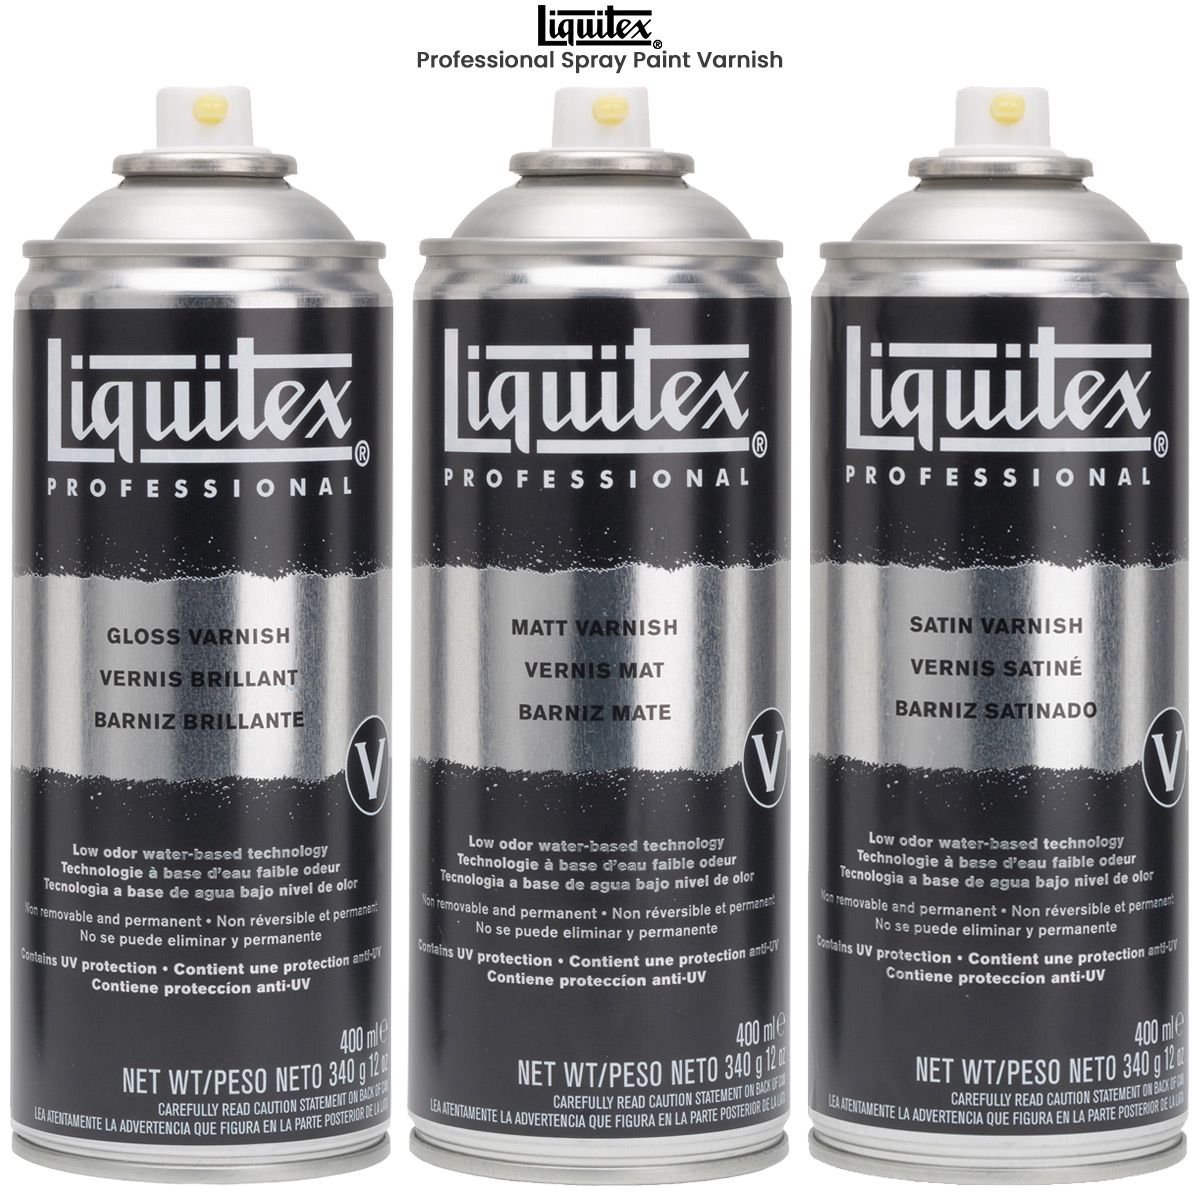 Liquitex Professional Spray Paint Varnish